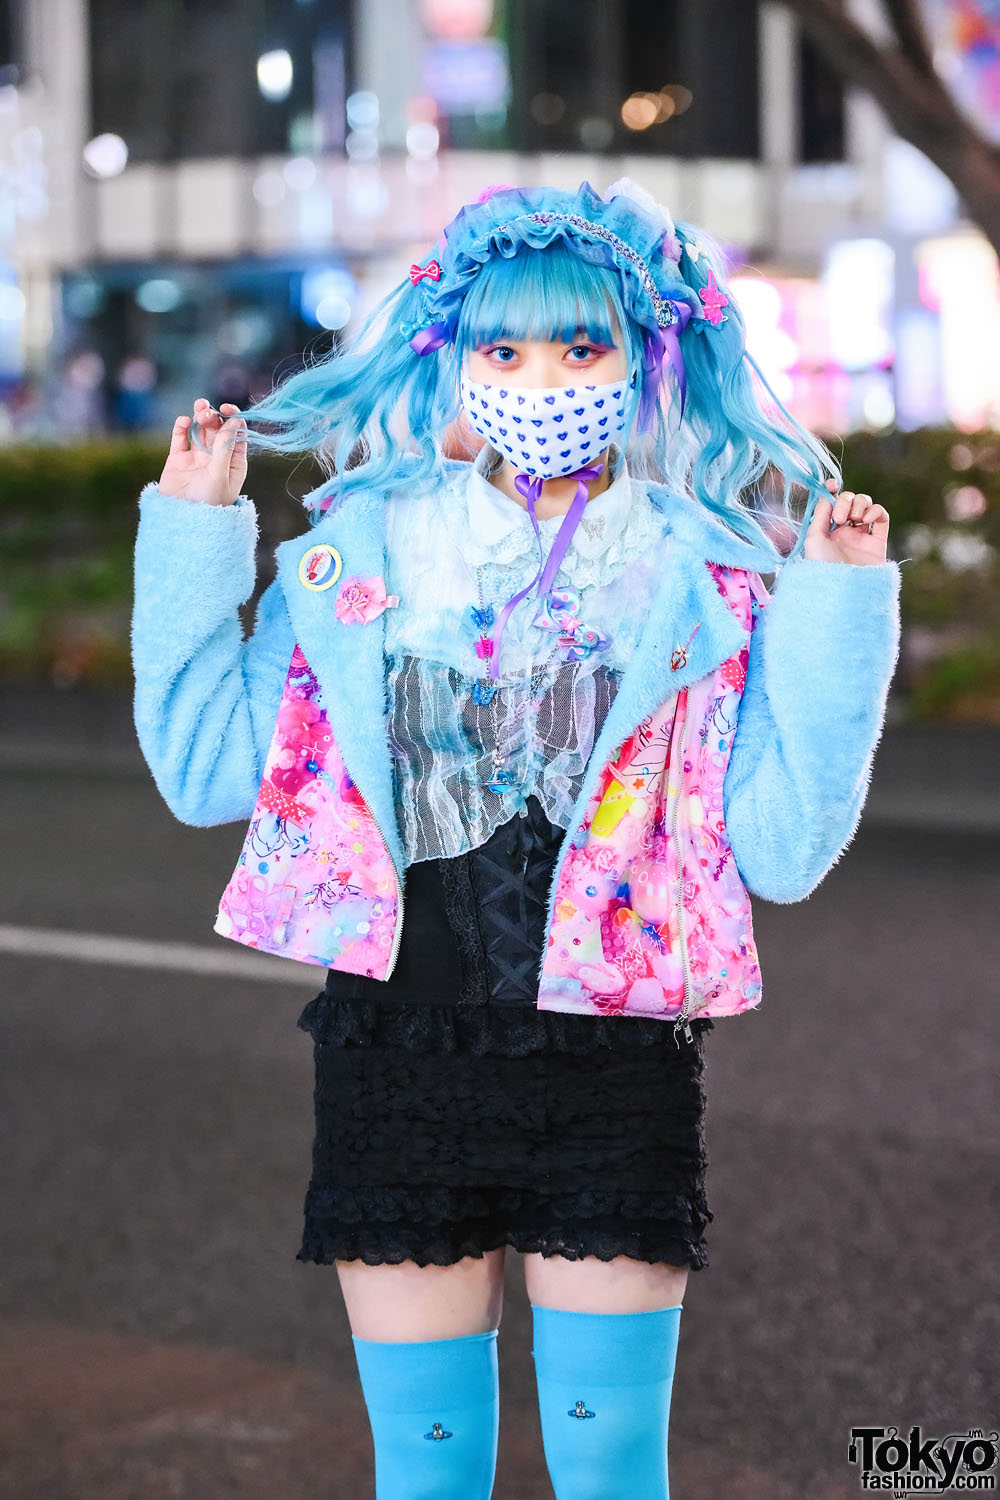 Tokyo Fashion on X: Harajuku girl w/ oversized bomber, Vivienne